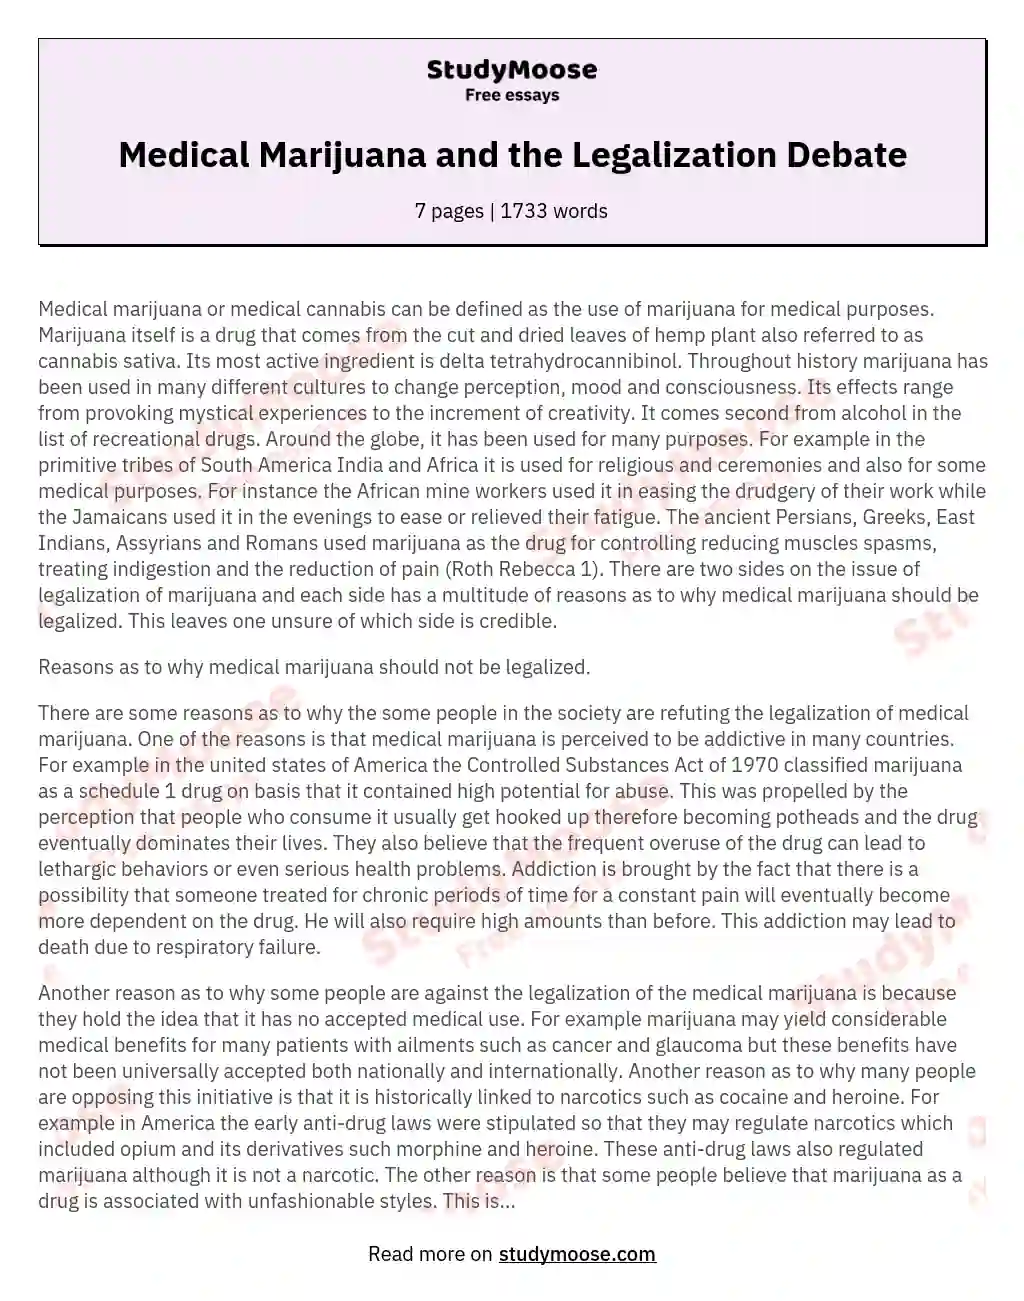 Medical Marijuana and the Legalization Debate